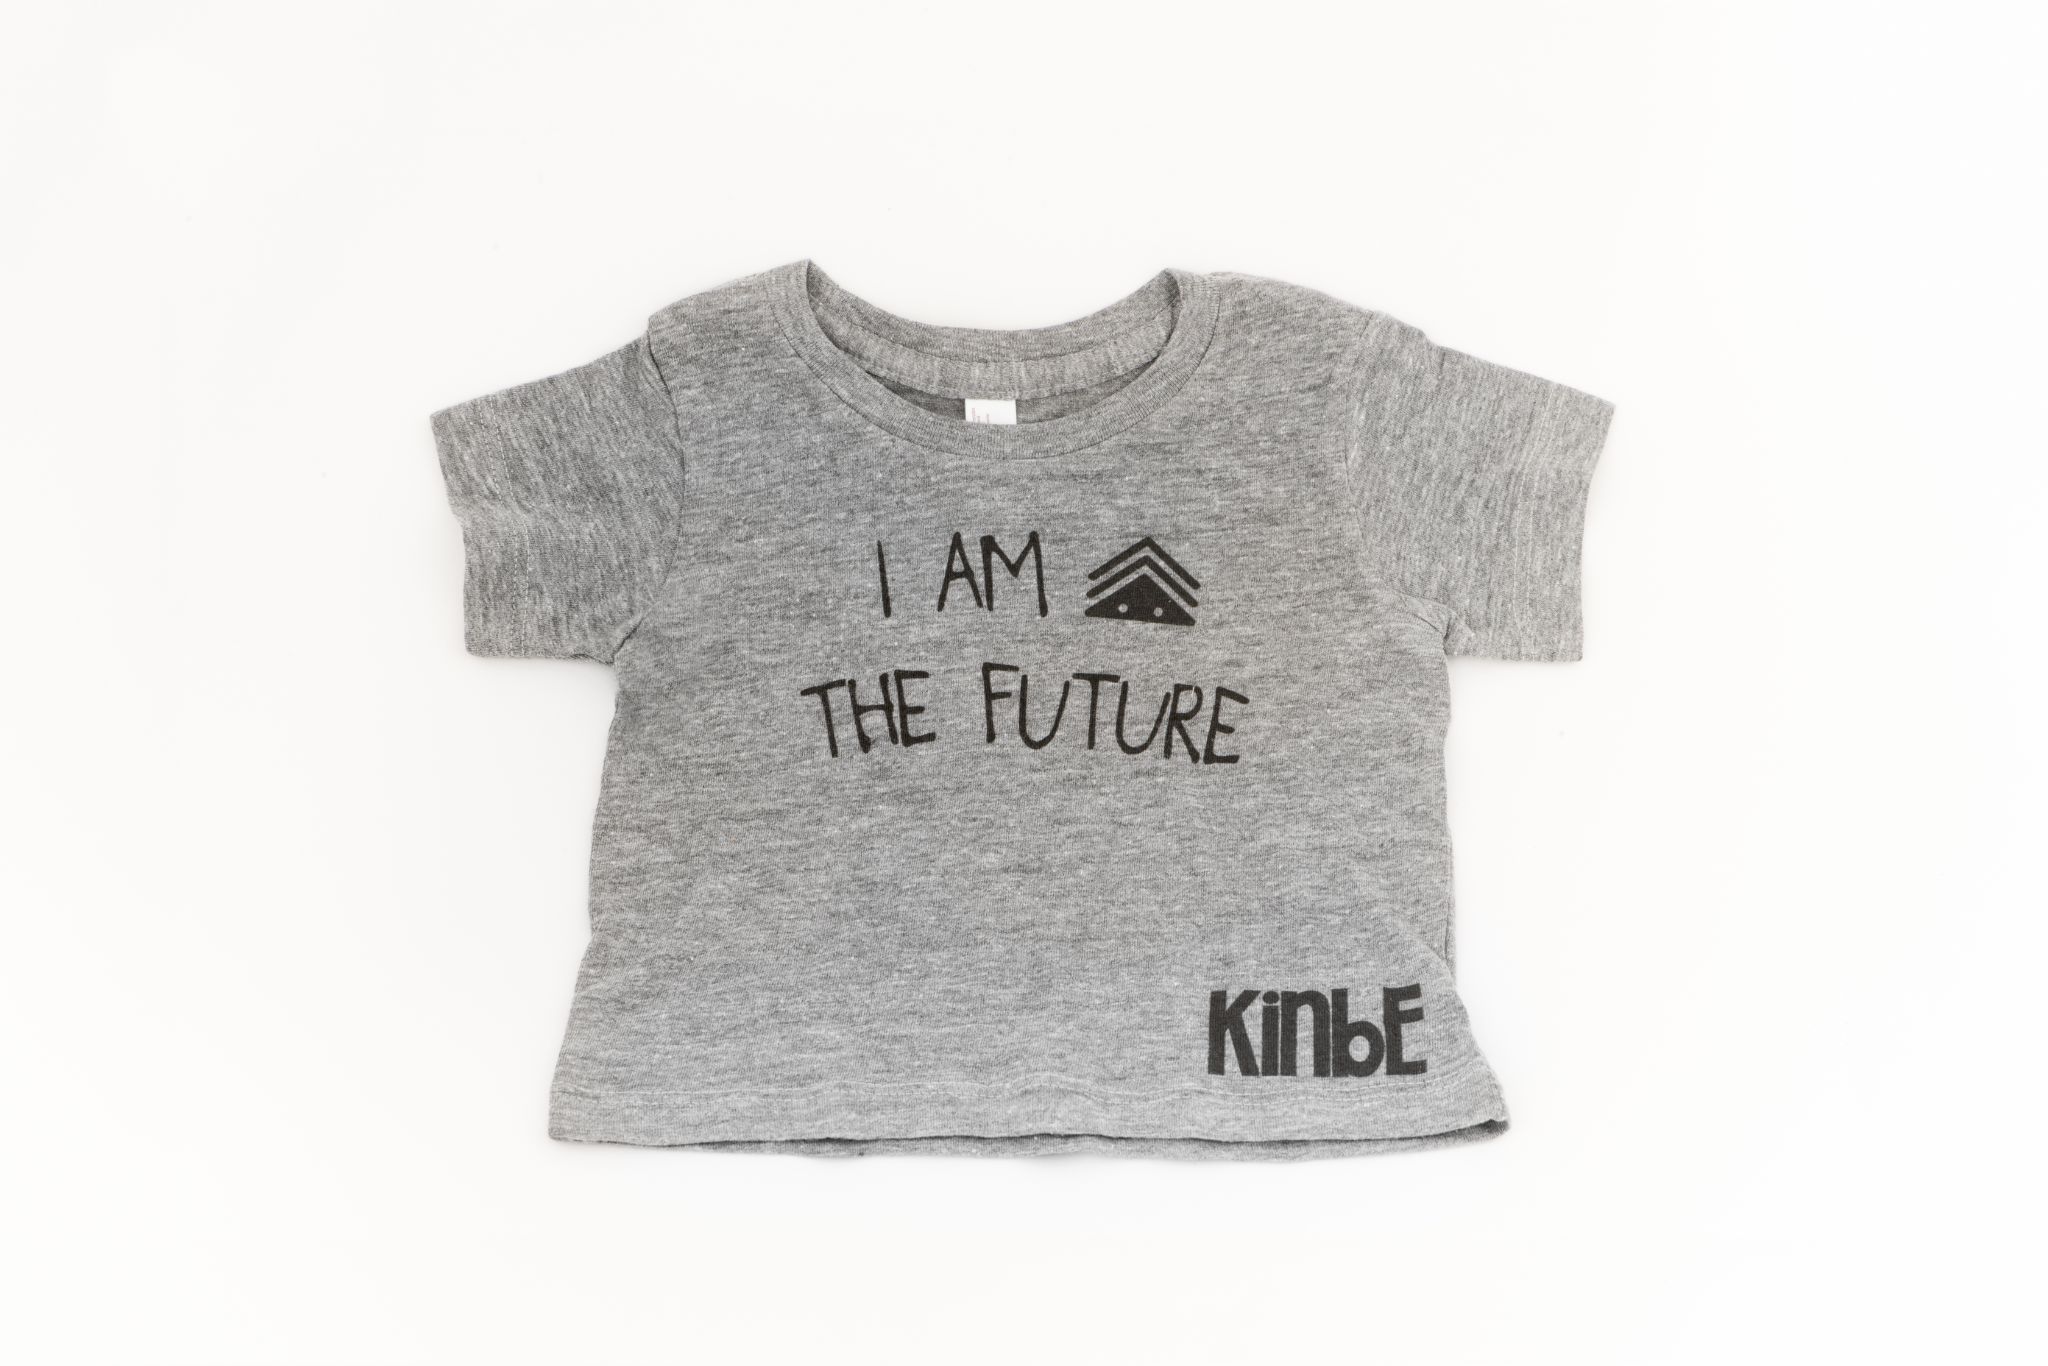 Kinbe Kids Product Gray I Am The Future shirt on display with Kinbe logo